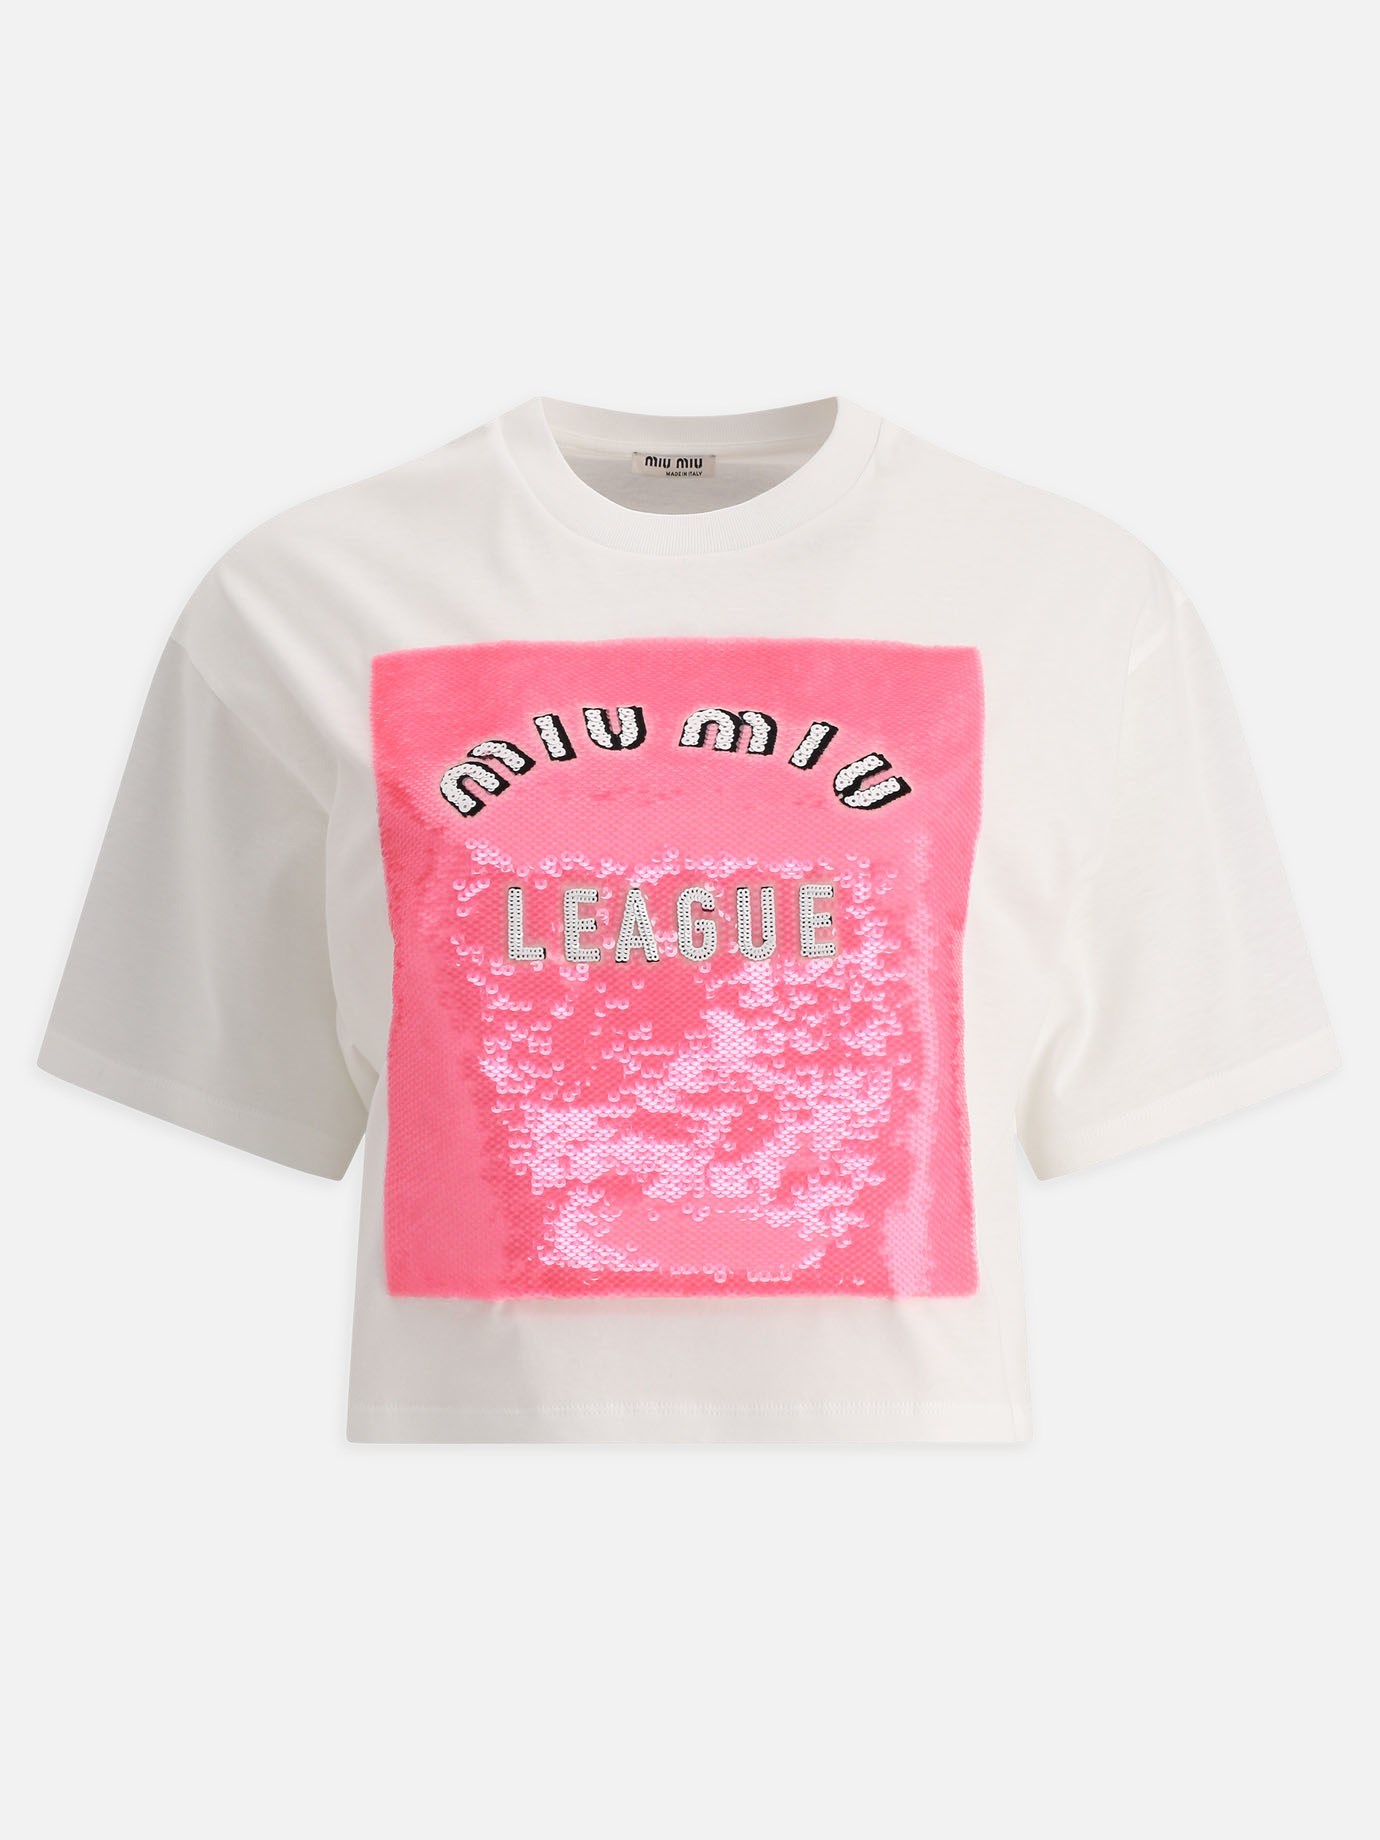  League  sequin t-shirt by Miu Miu